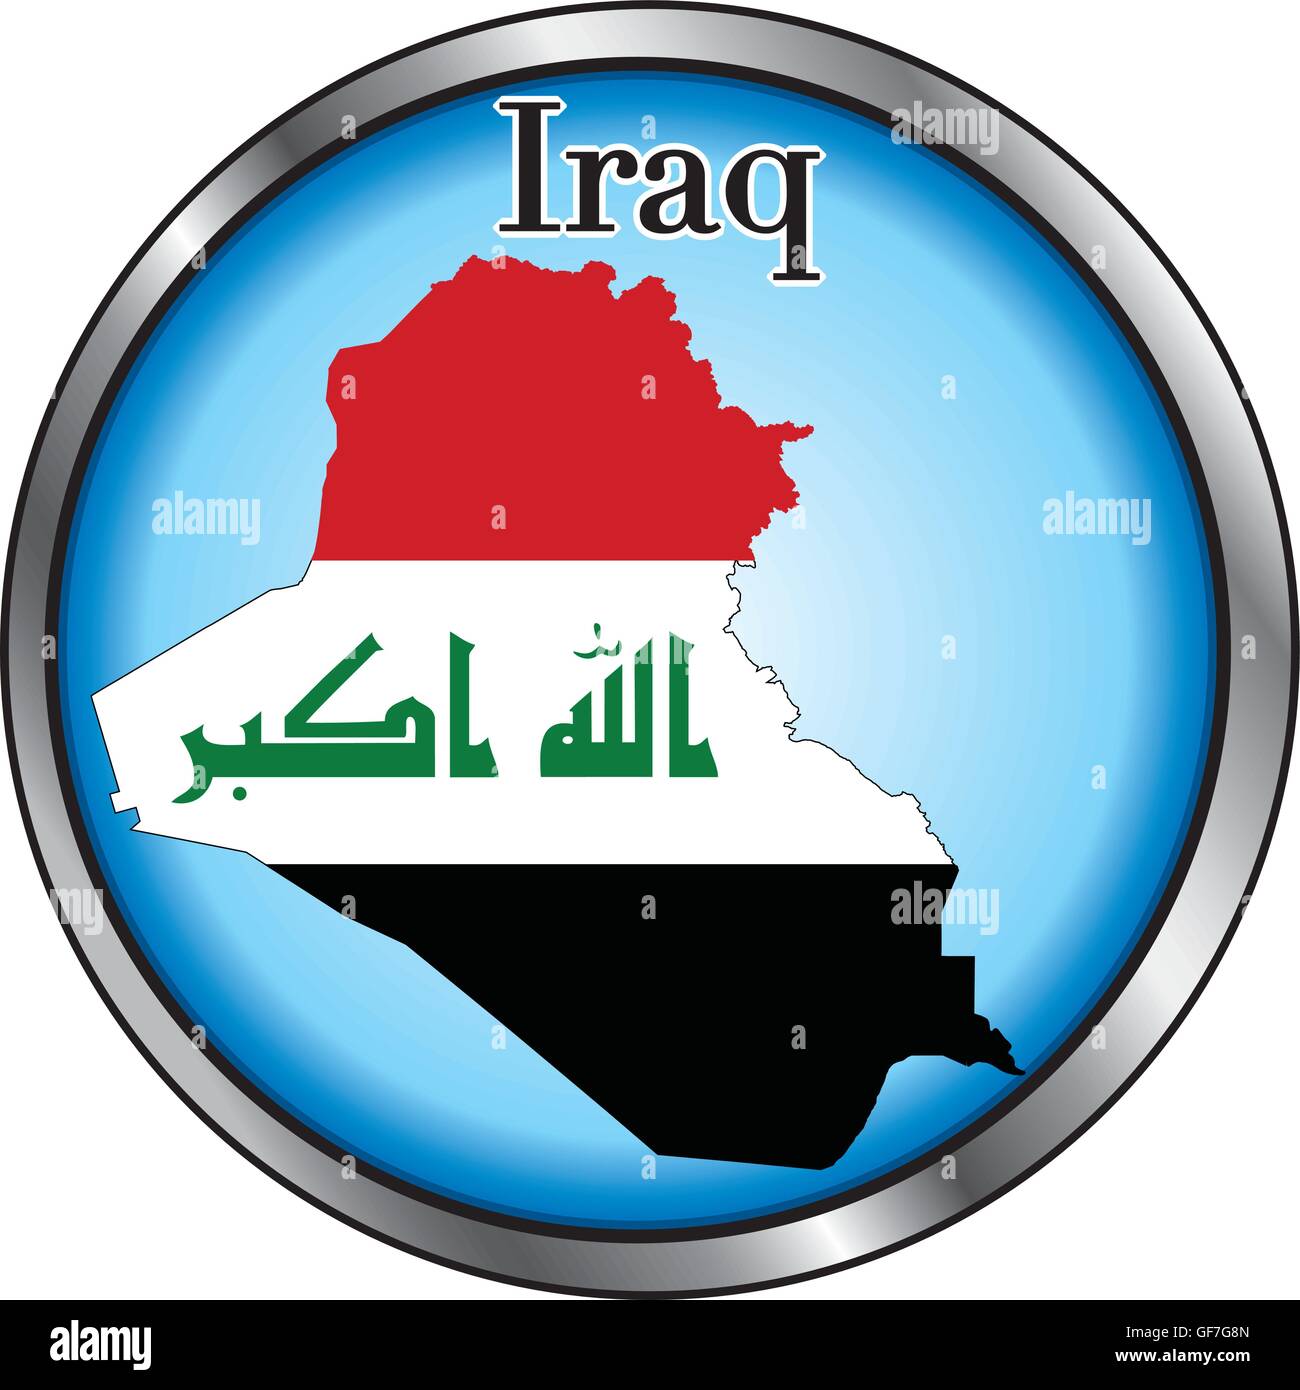 Vektor-Illustration für den Irak, Runde Taste. Stock Vektor